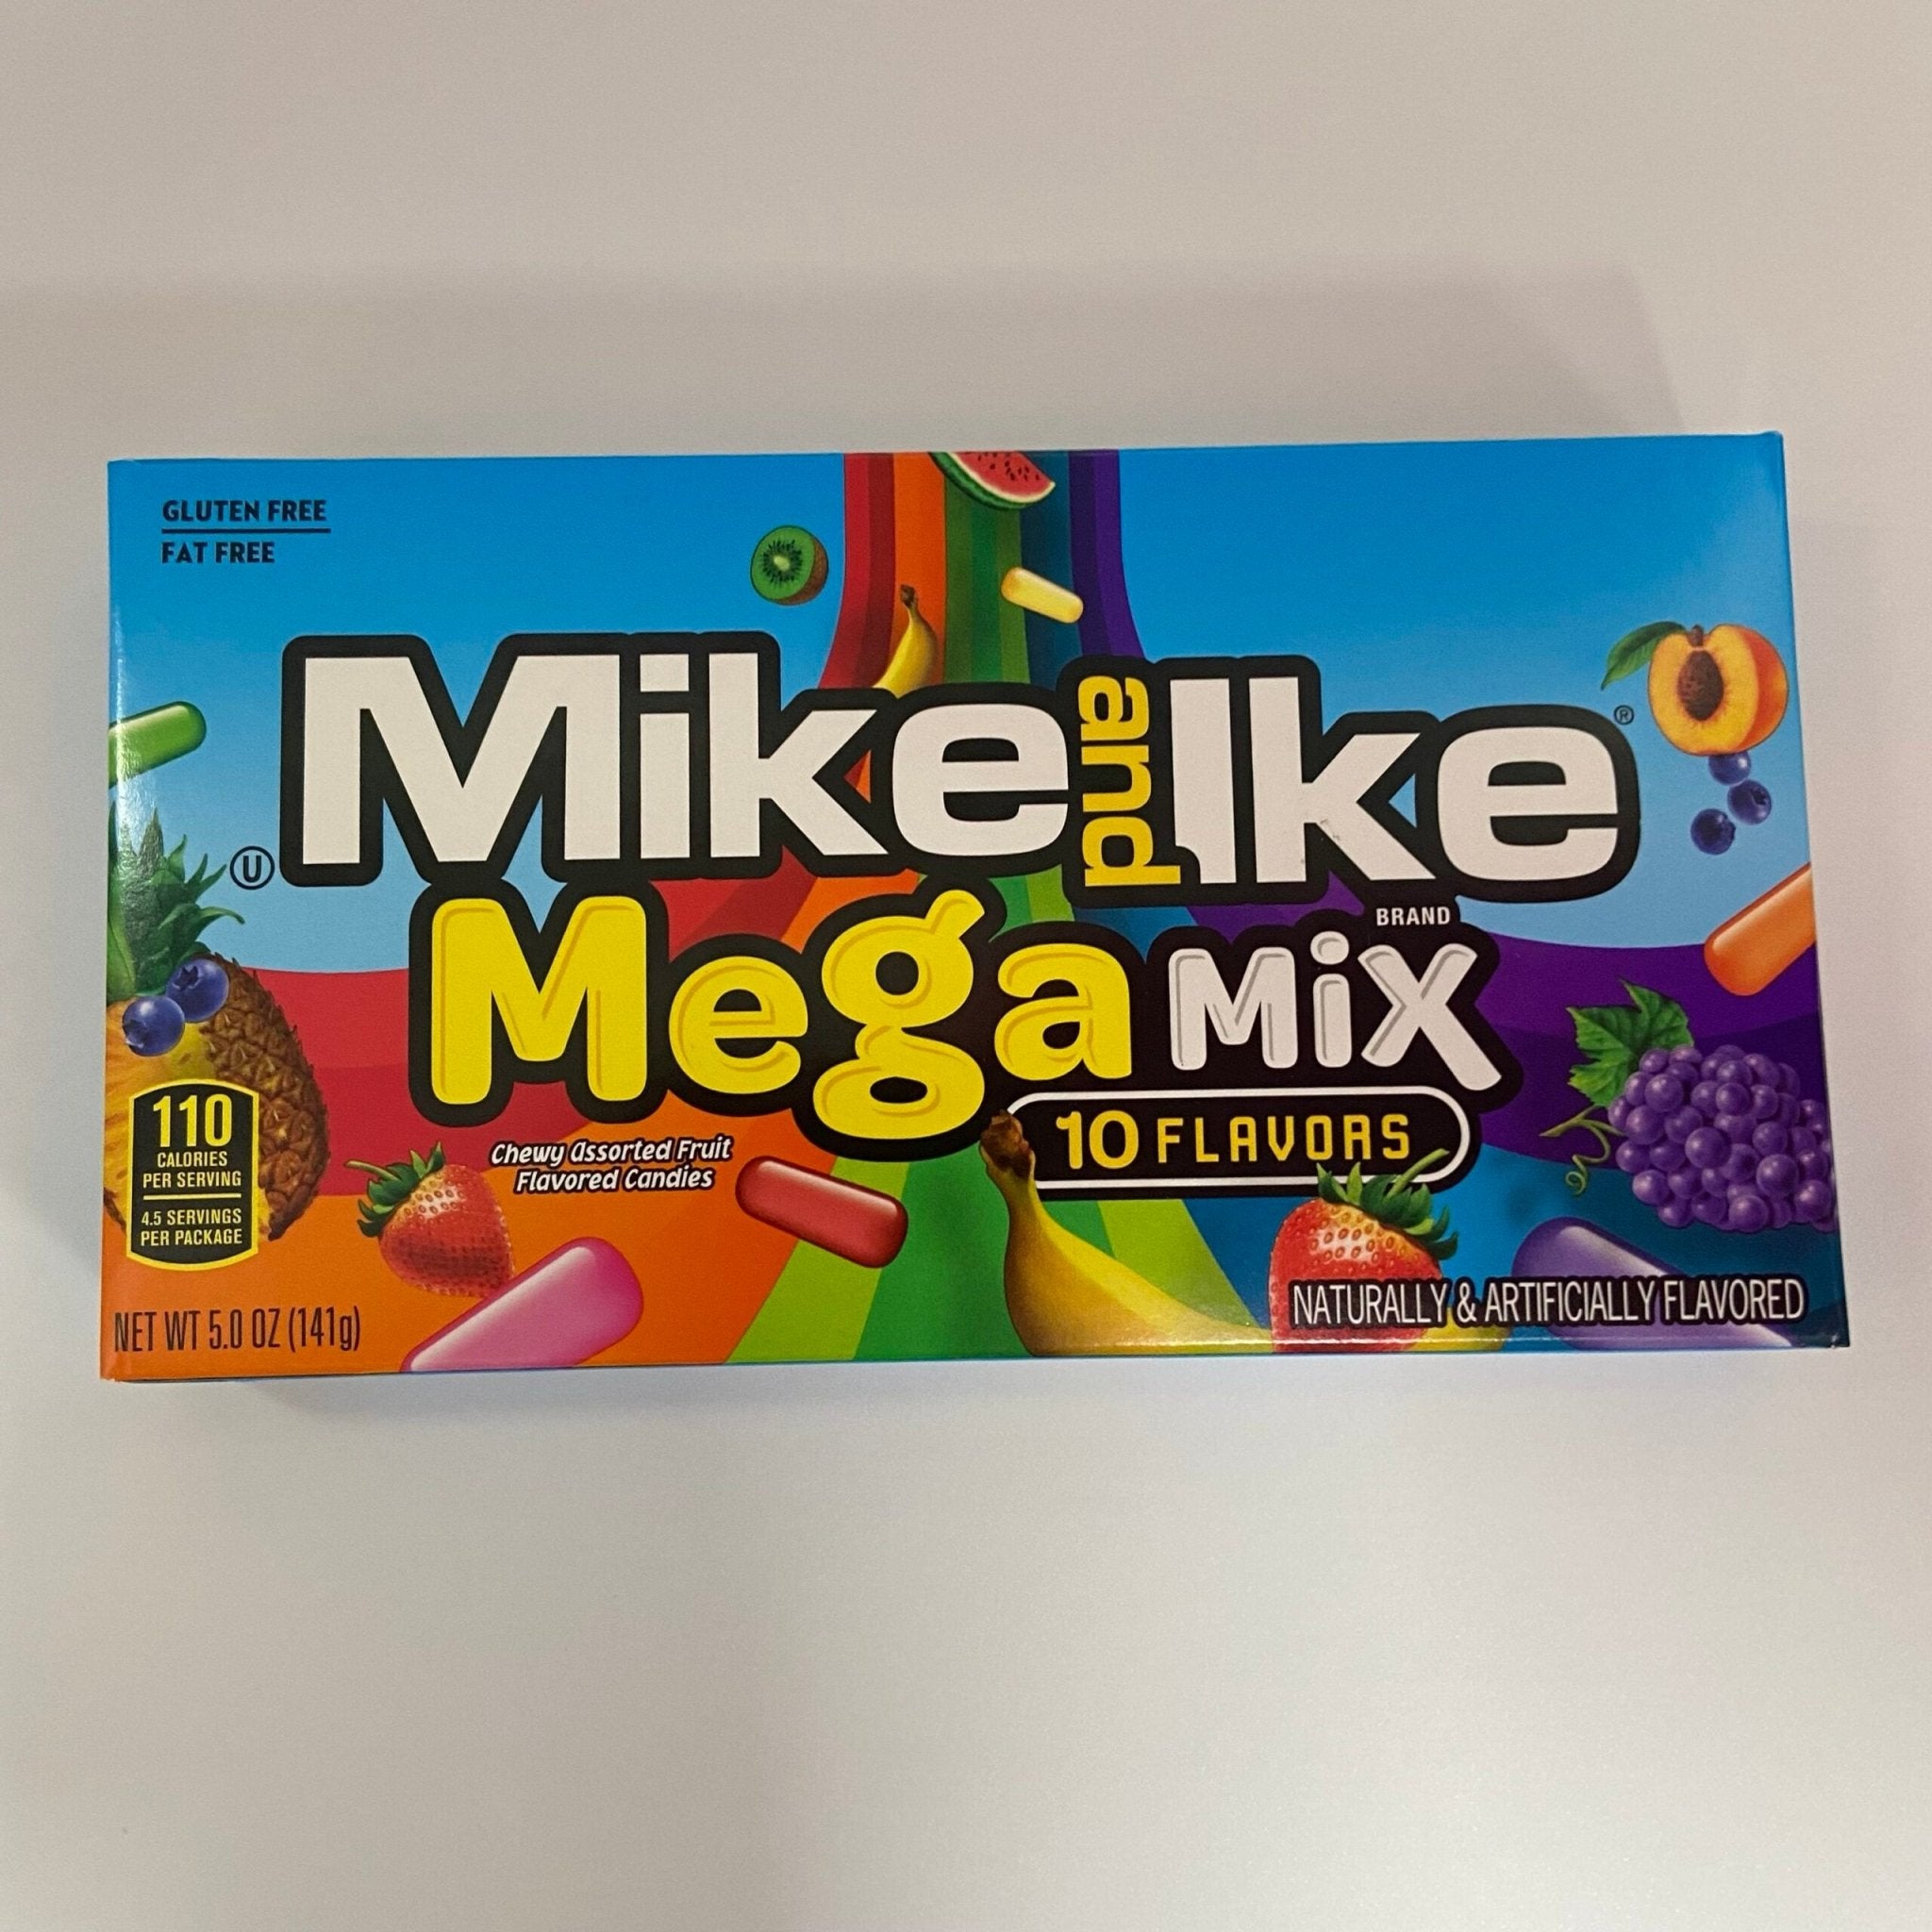 Mikeandike mega mix box - Dream Candy